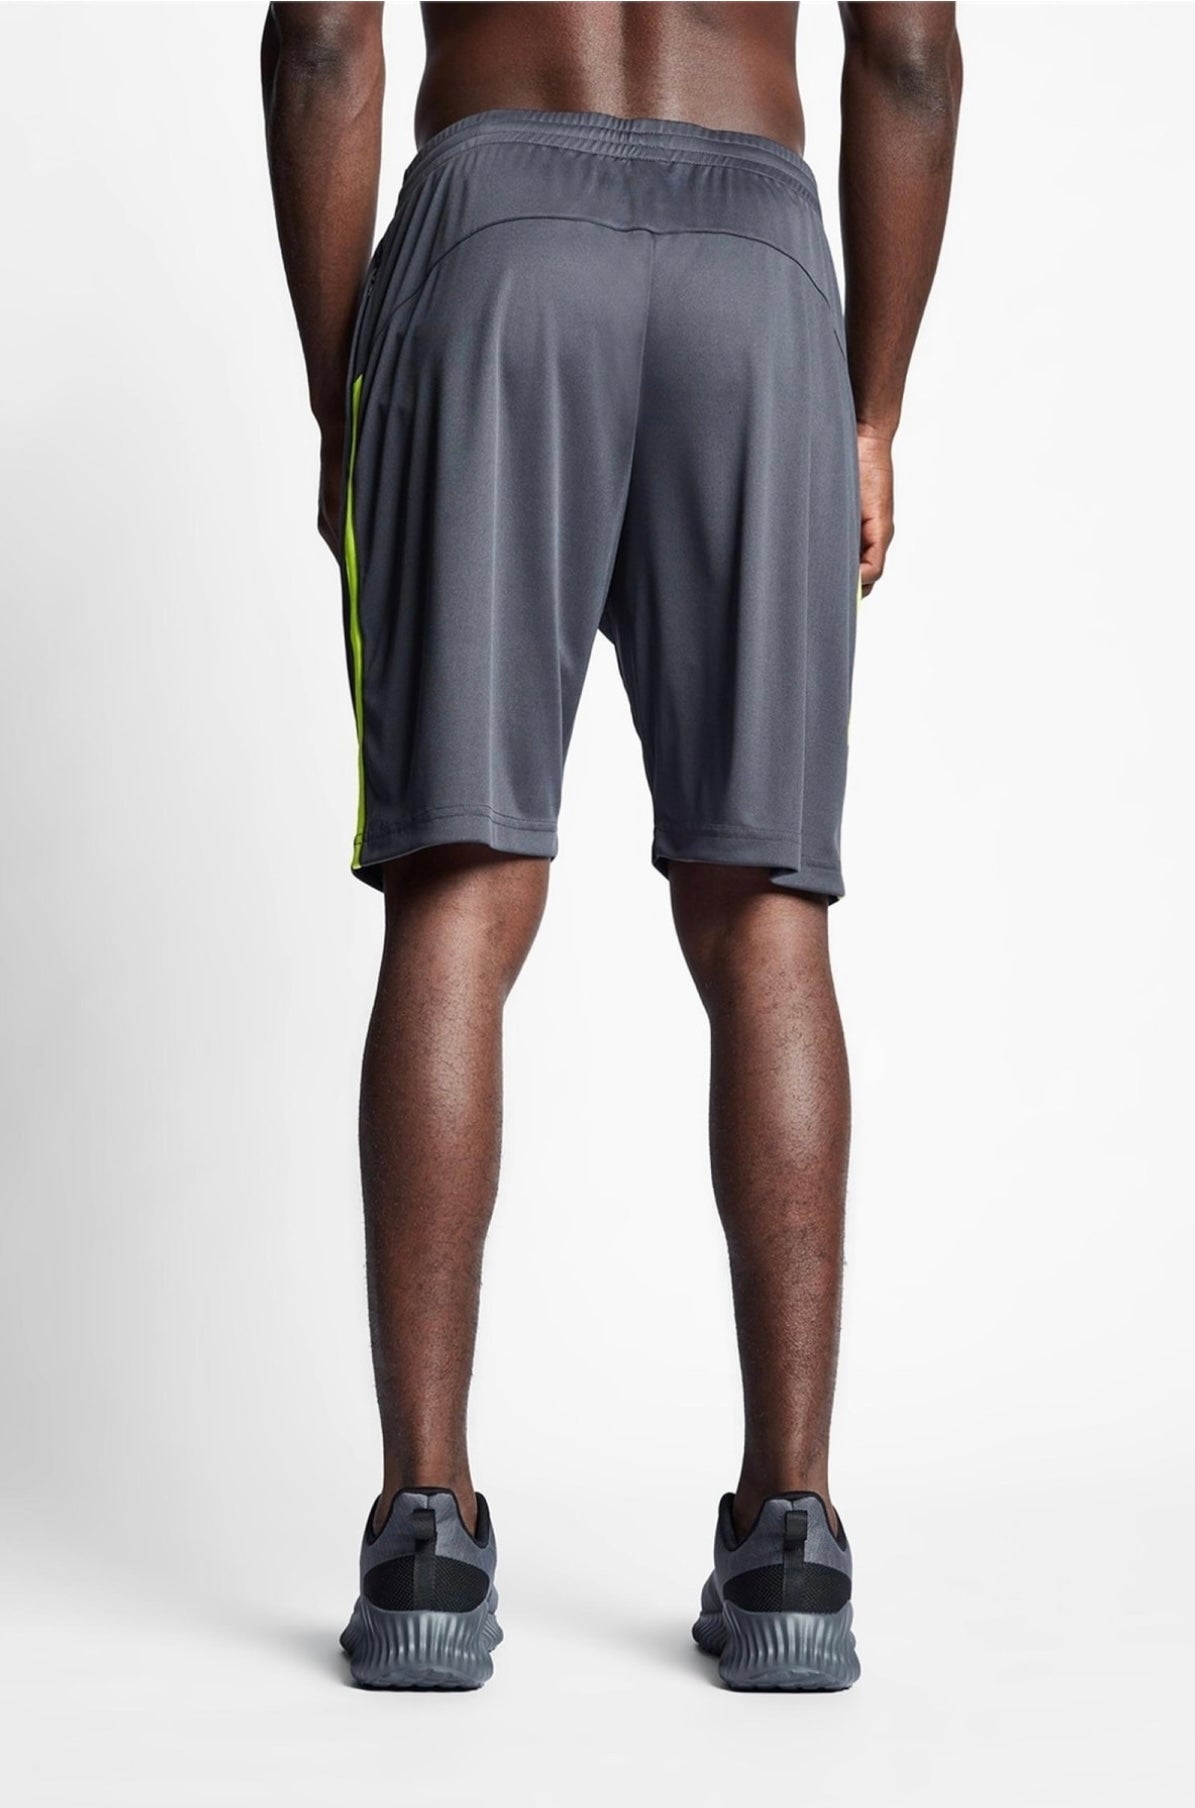 Lescon Anthracite Neon Green Men's Shorts 20S-1224-20B